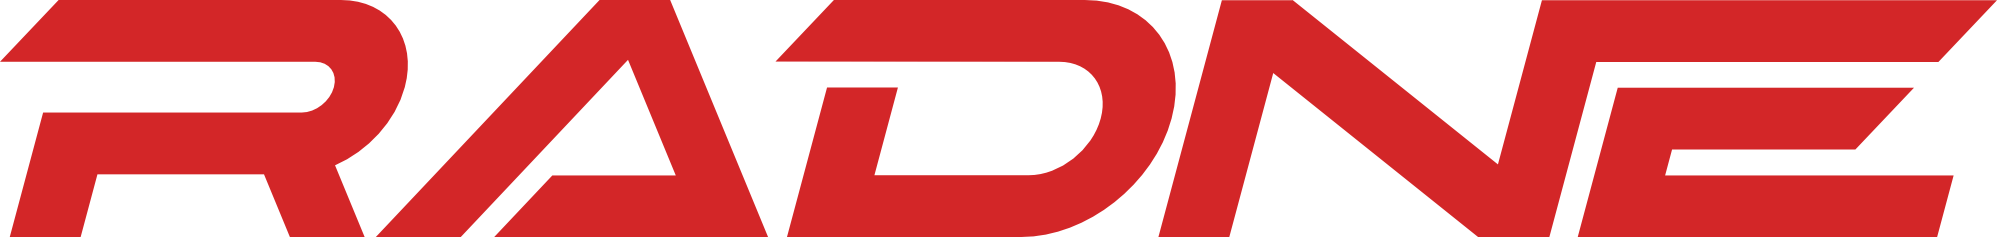 Radnes logo for download in vector format